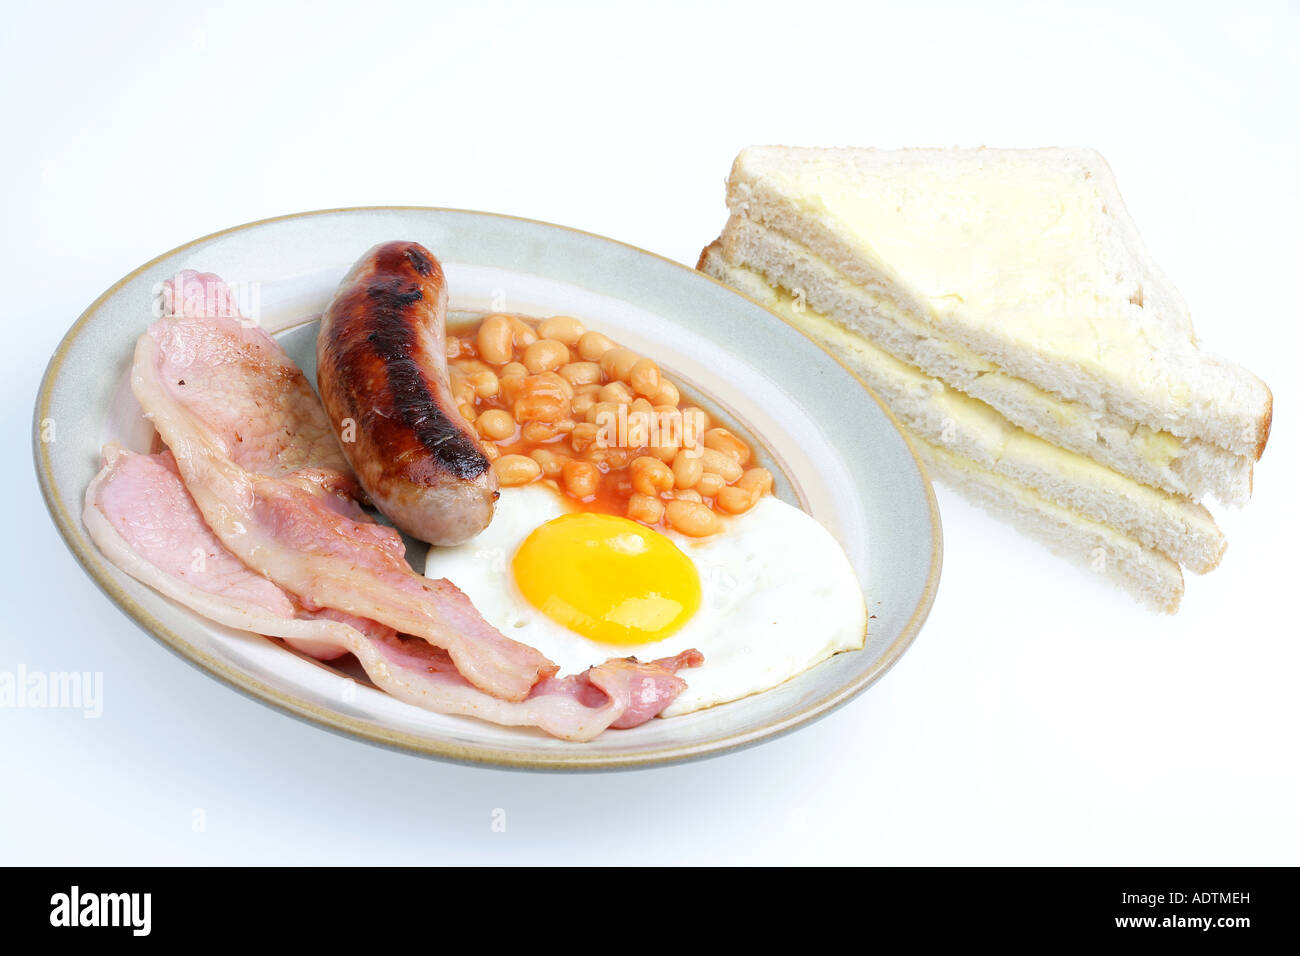 full-breakfast-fried-egg-toast-brunch-png-favpng-ANpeFLmBDrdY8XWj1ppAJXz5S  - The Royal Oak